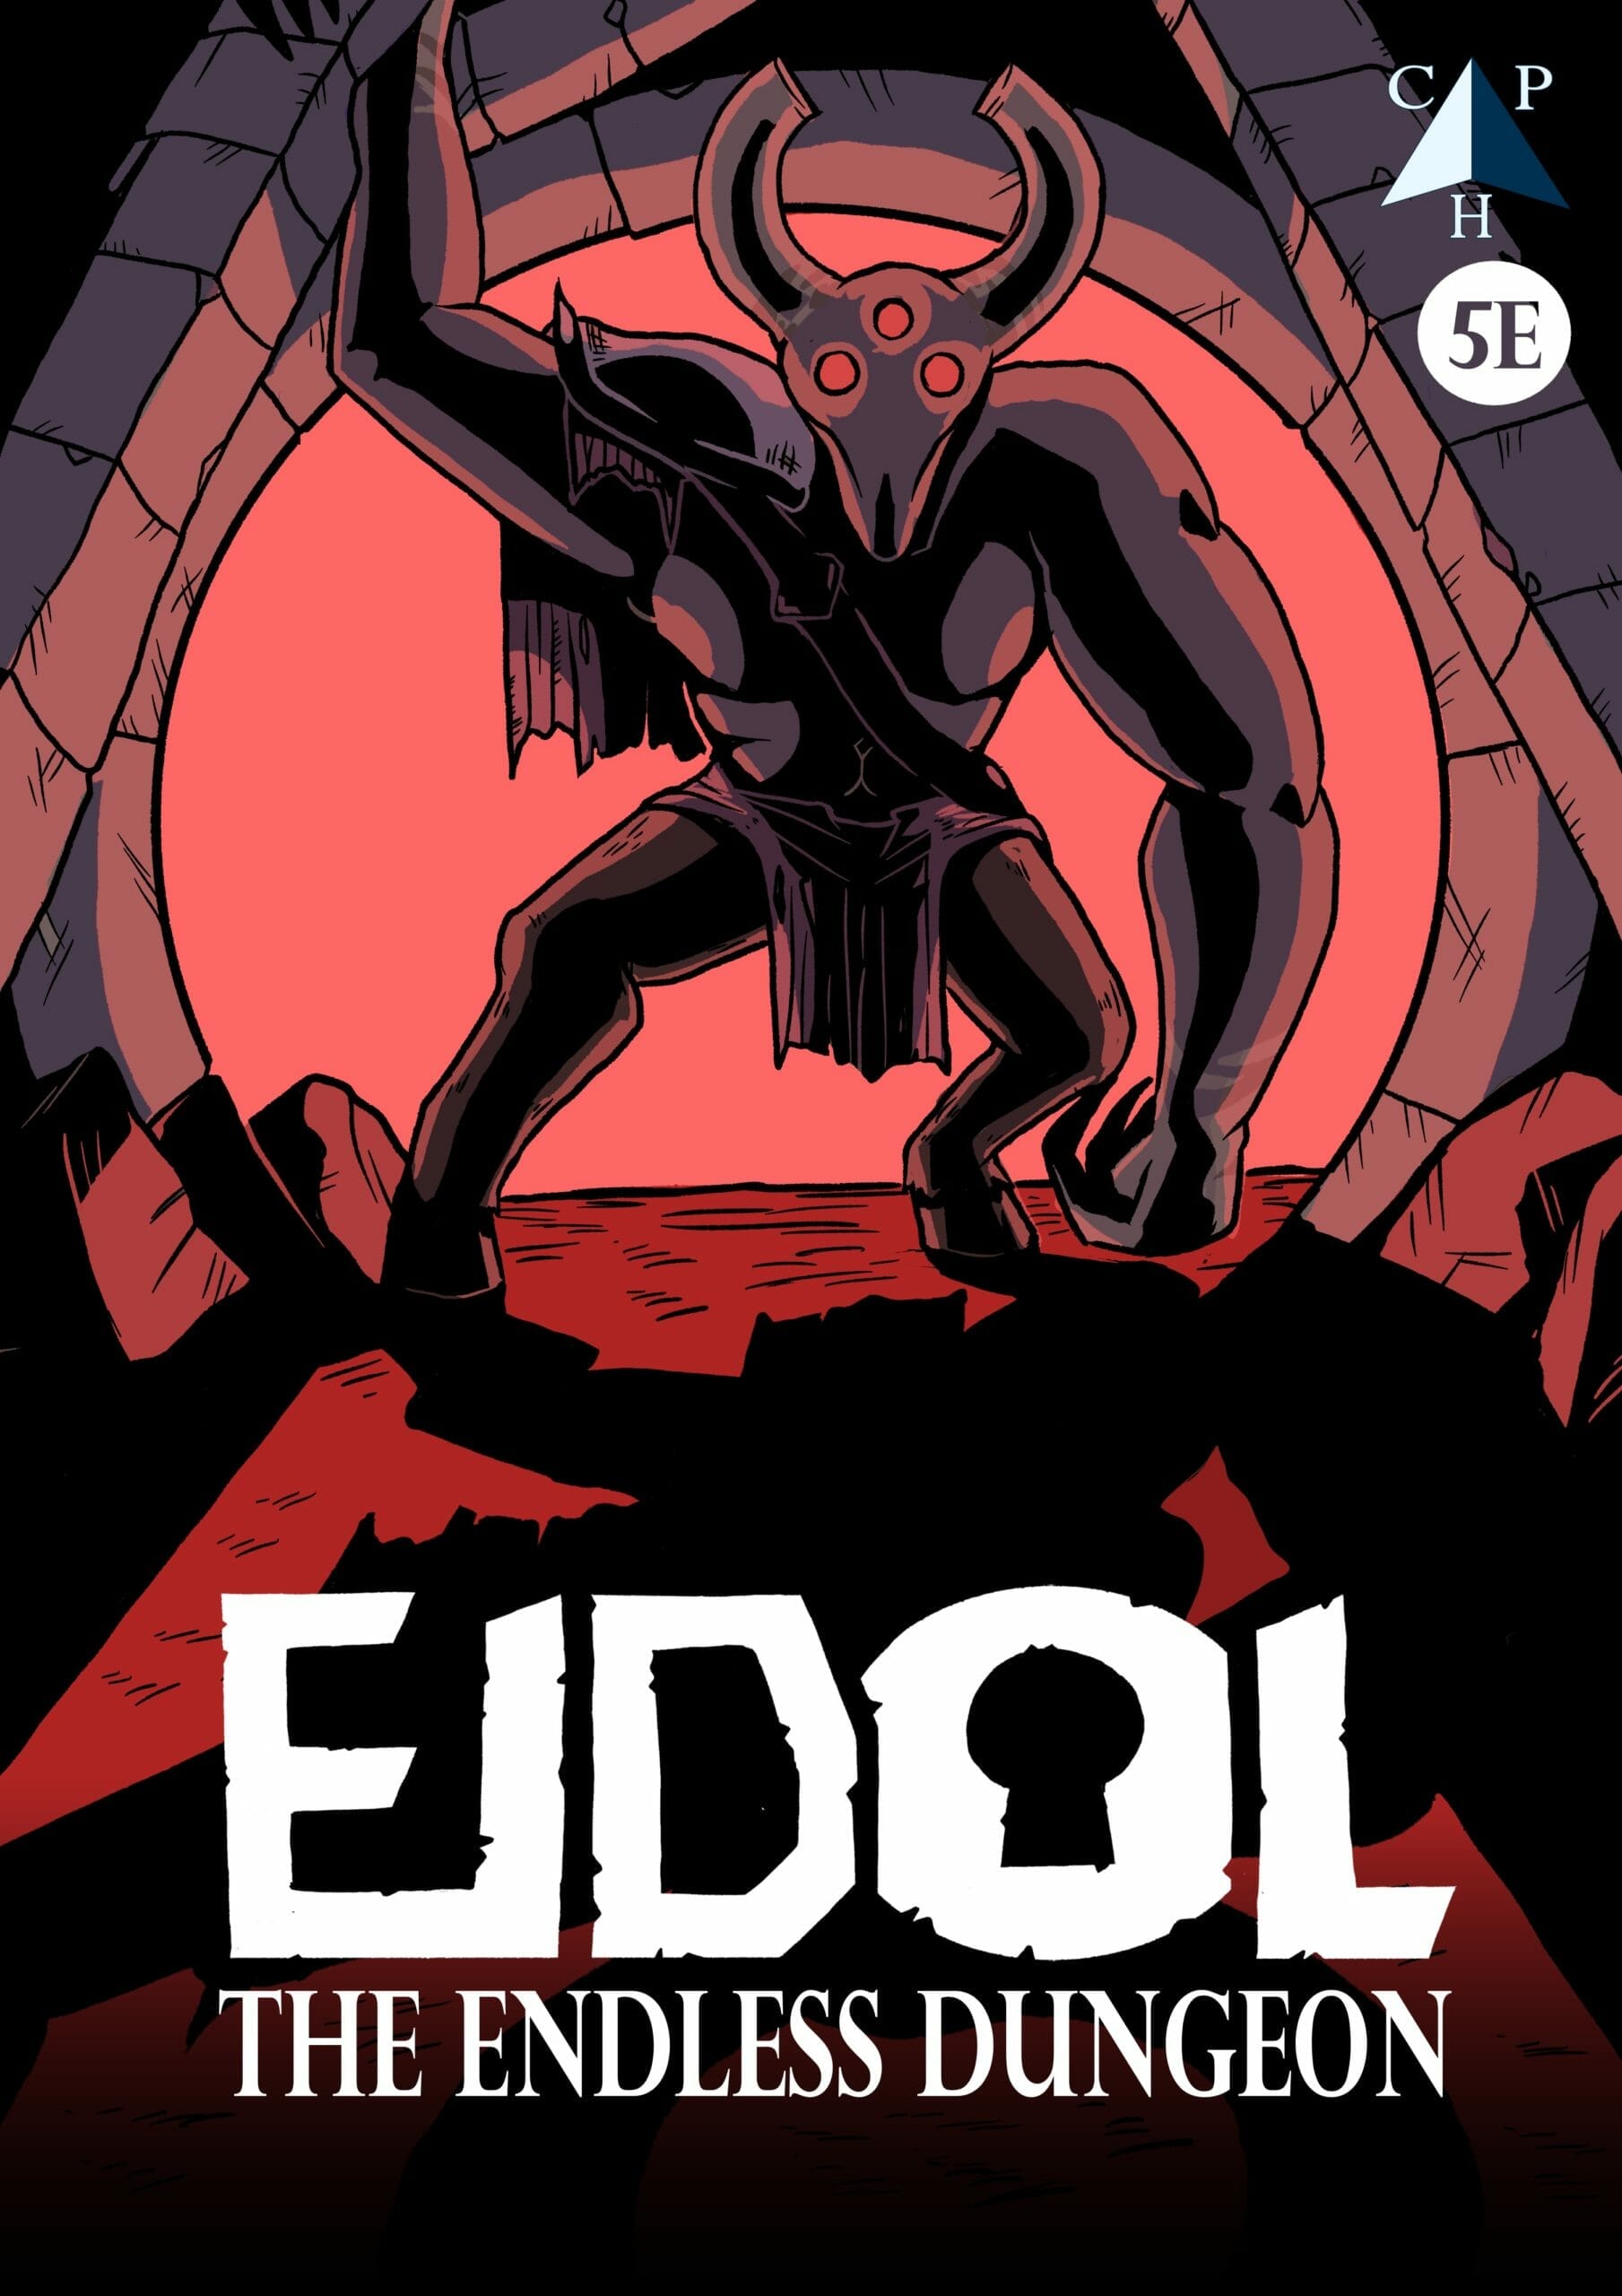 Eidol 5e cover